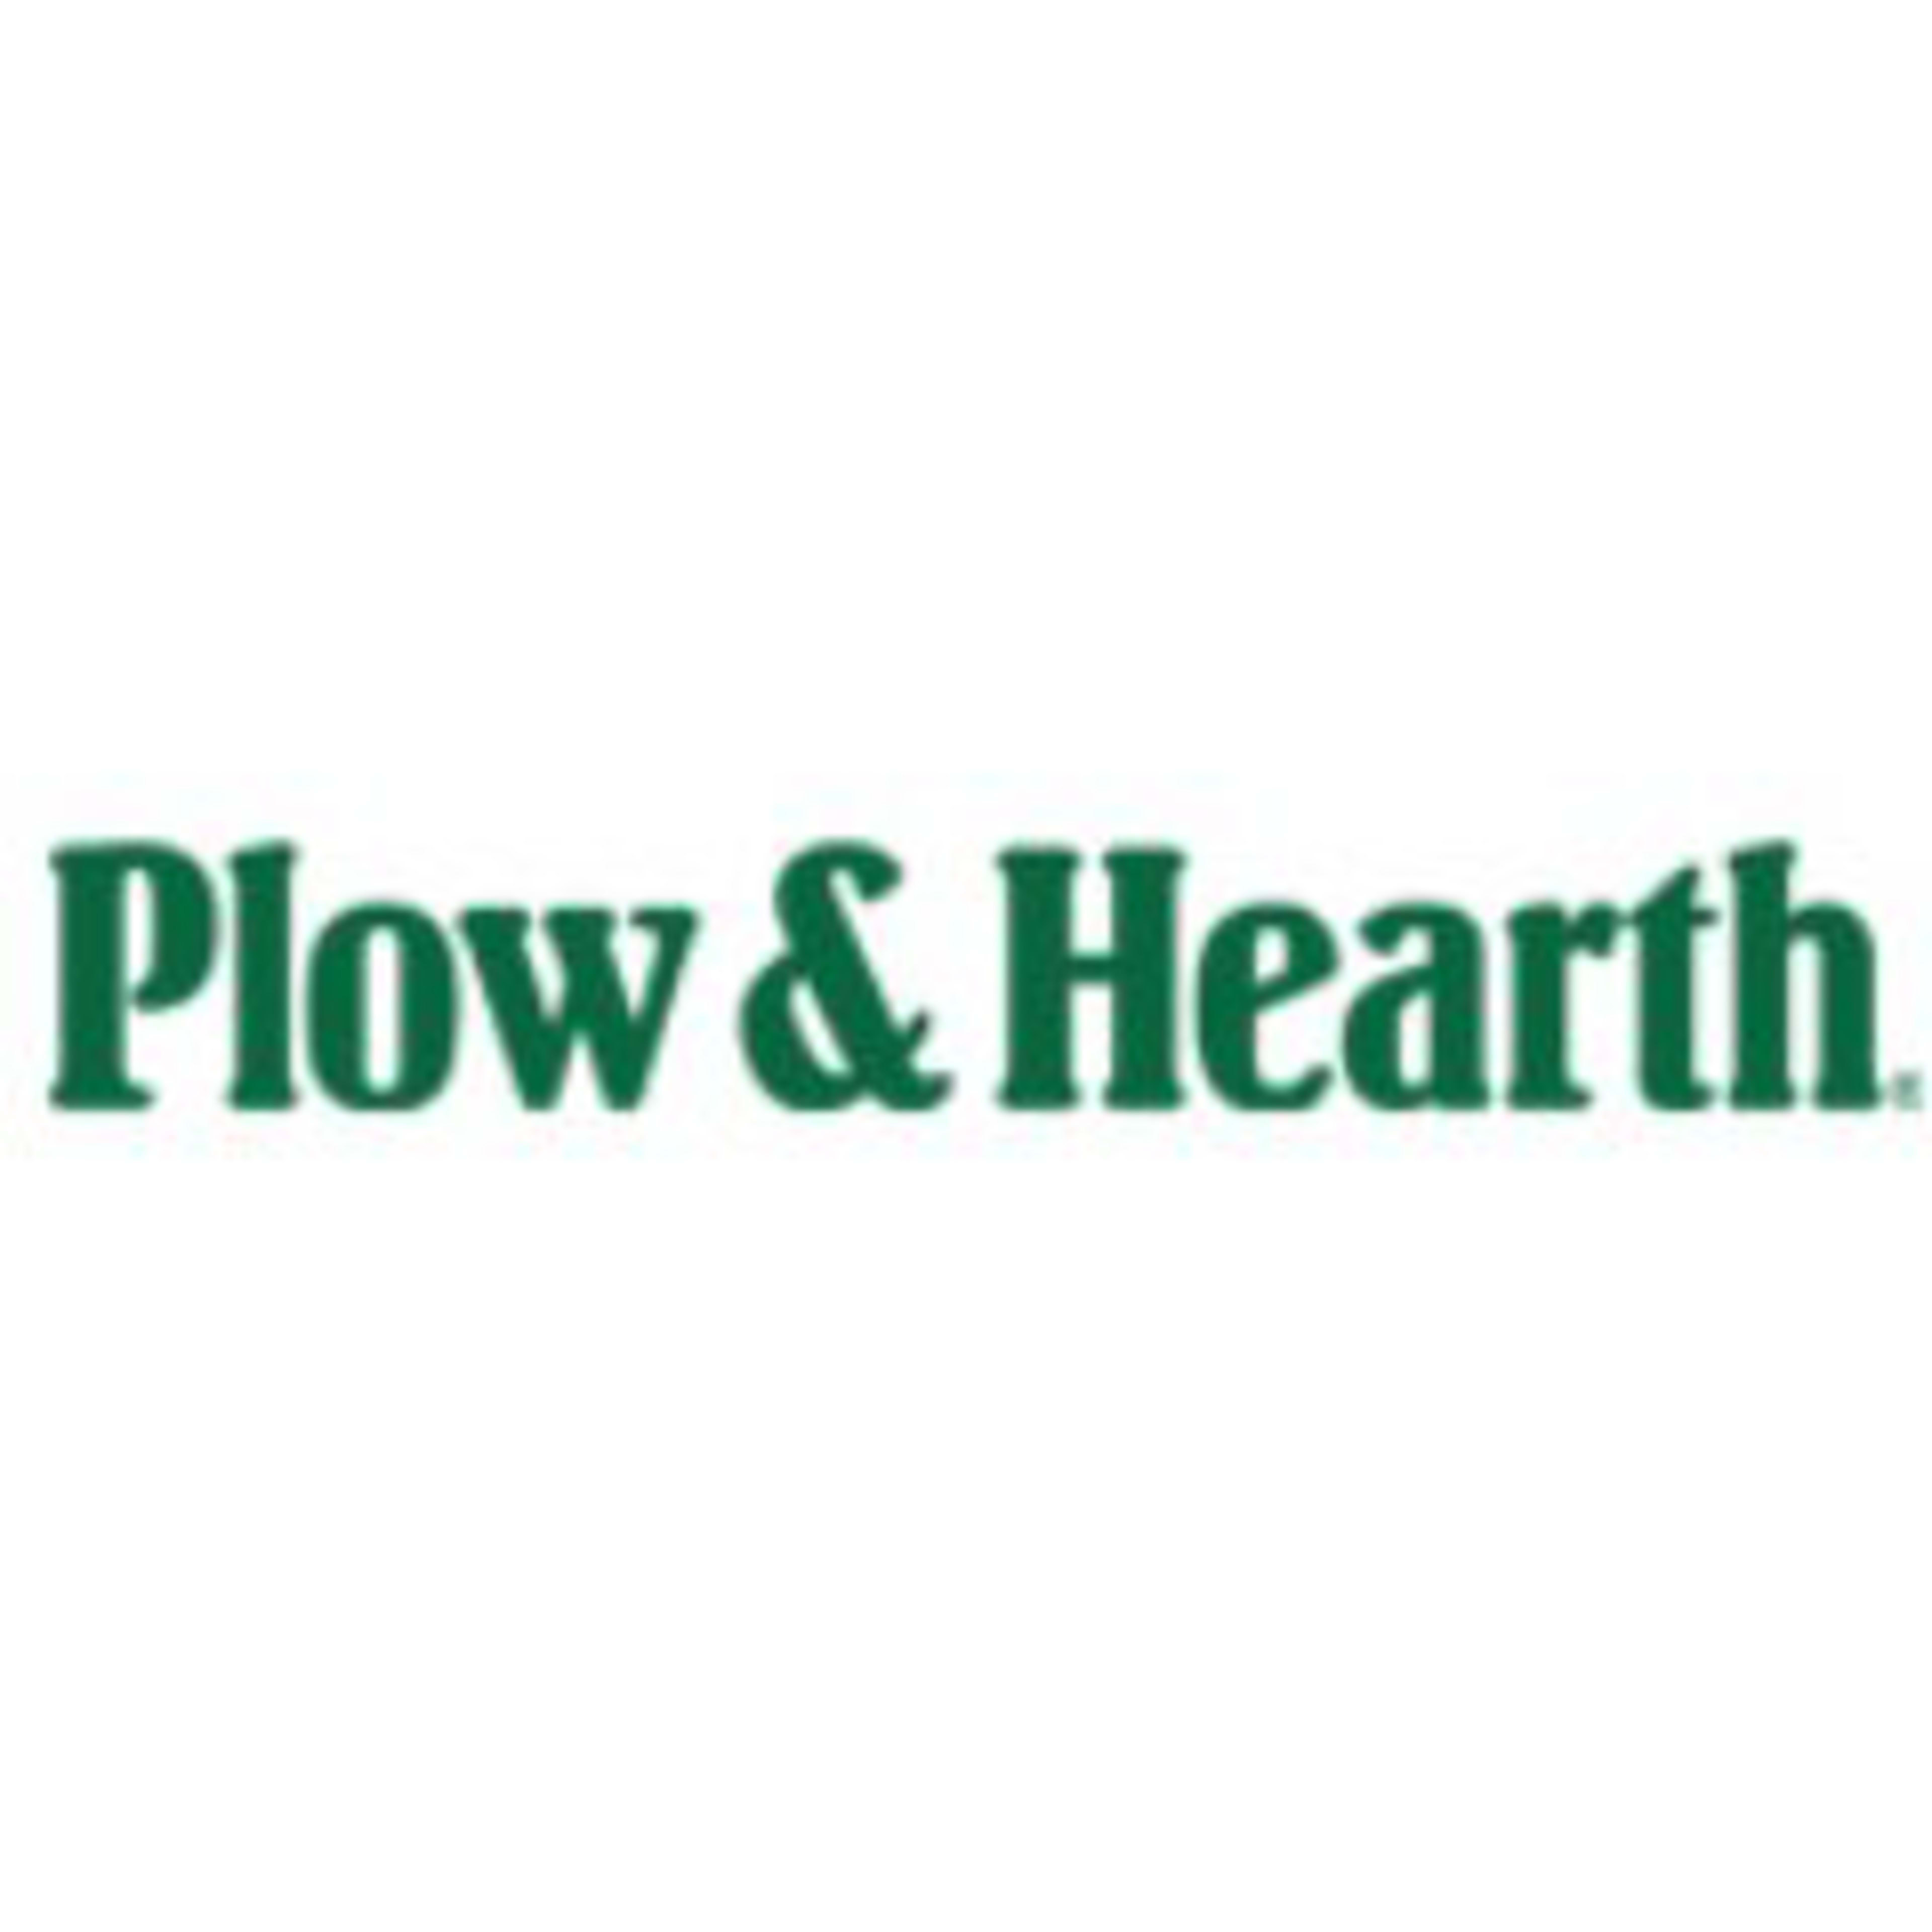 Plow & HearthCode